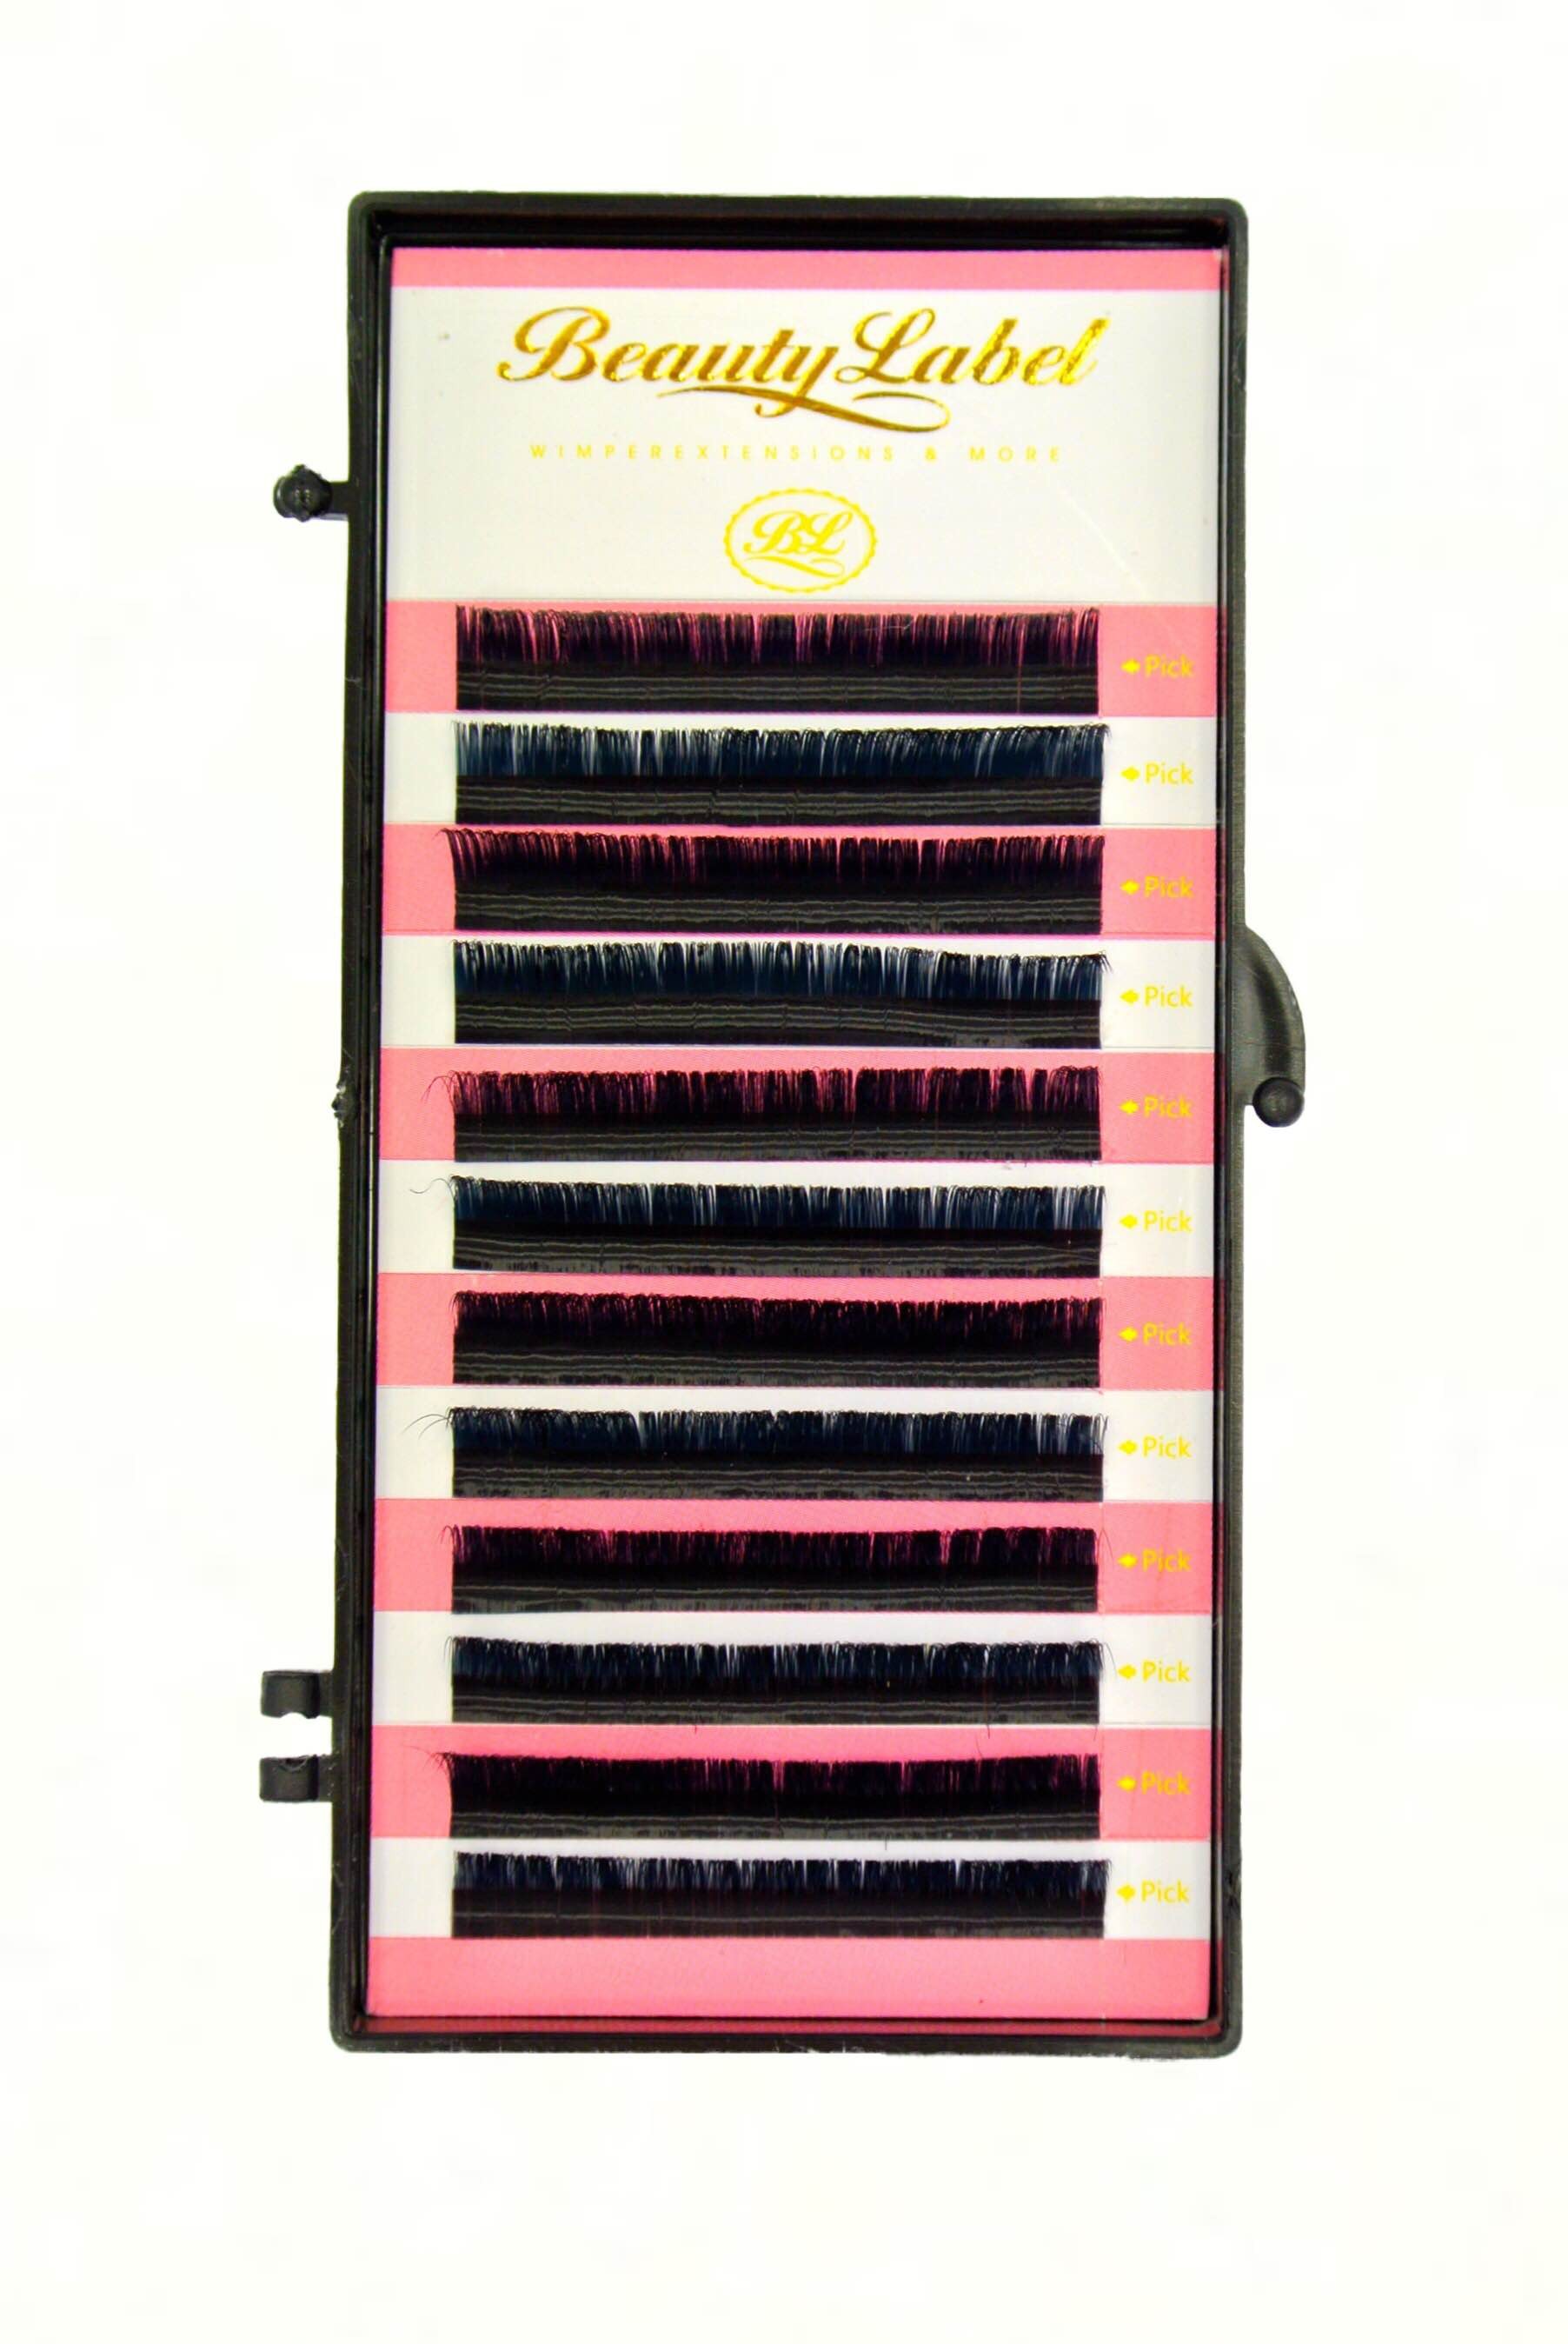 Beauty Label Soft Silk CC krul super zachte volume wimpers voor de proffesionele wimperstyliste te gebruiken.